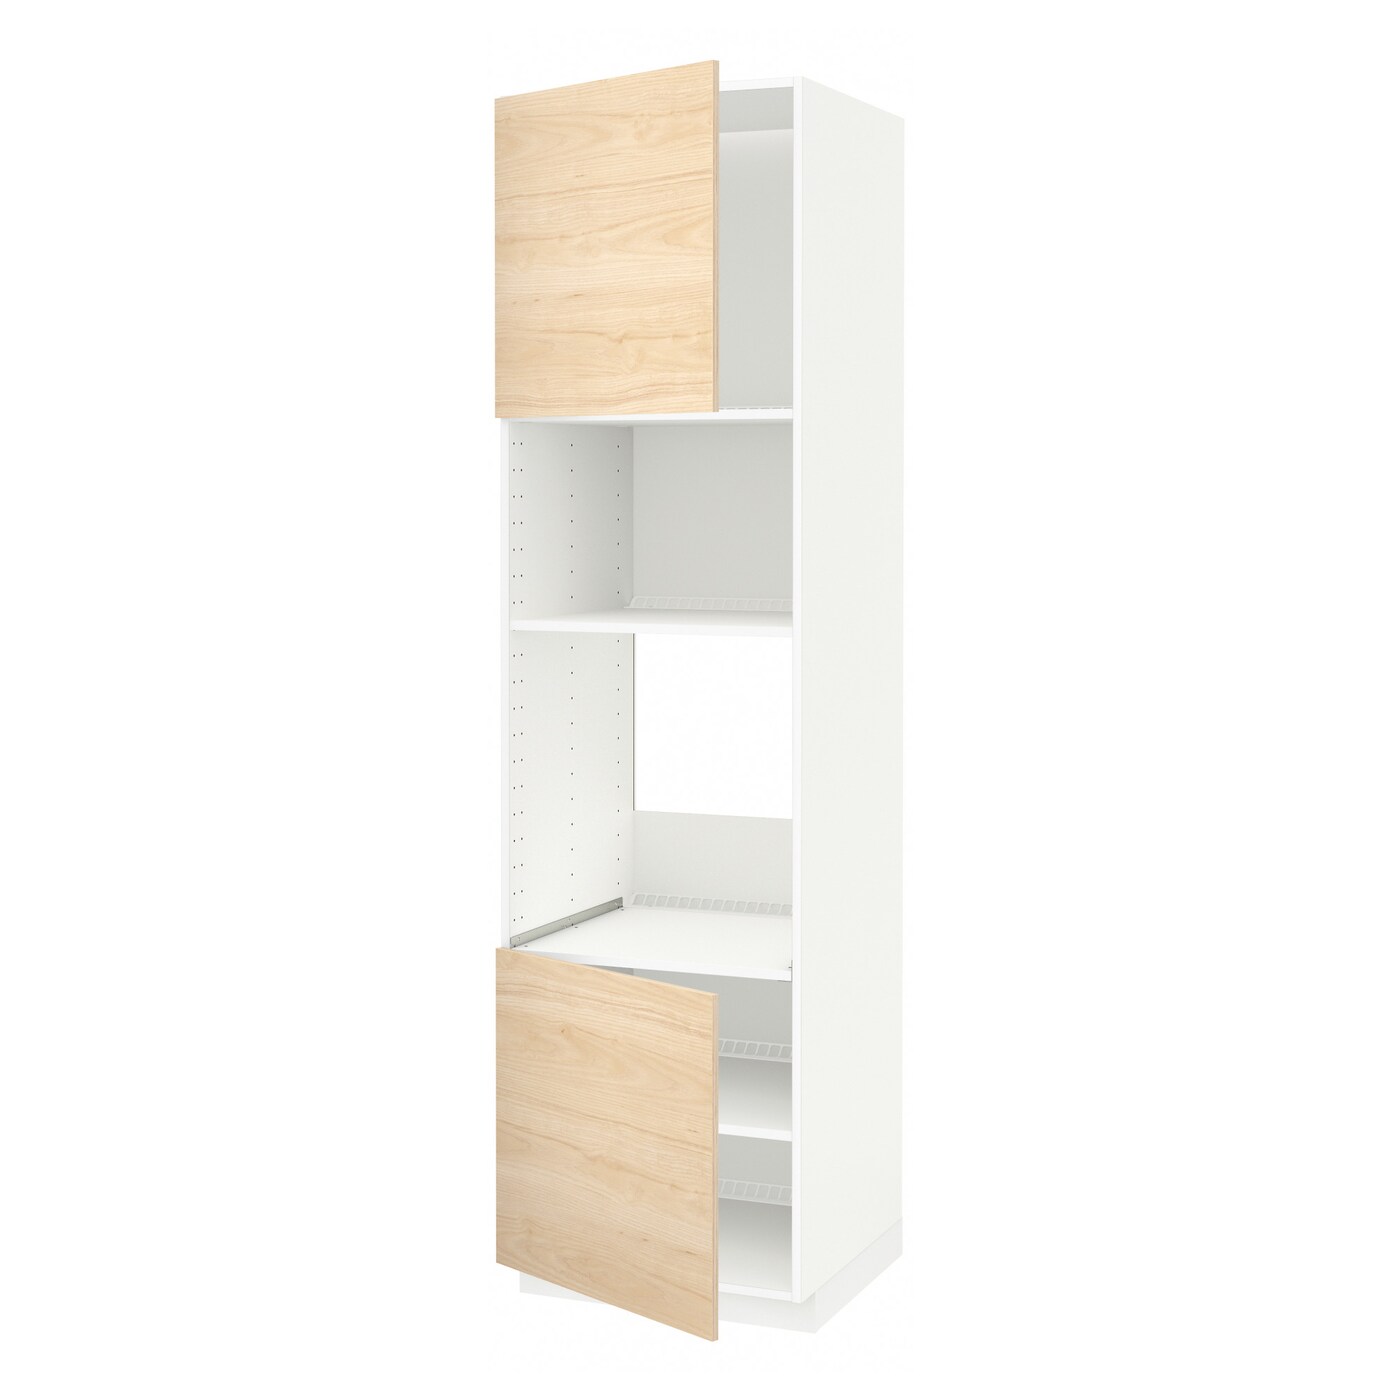 Кухонный шкаф-пенал - IKEA METOD/МЕТОД ИКЕА, 220х60х60 см, белый/под беленый дуб